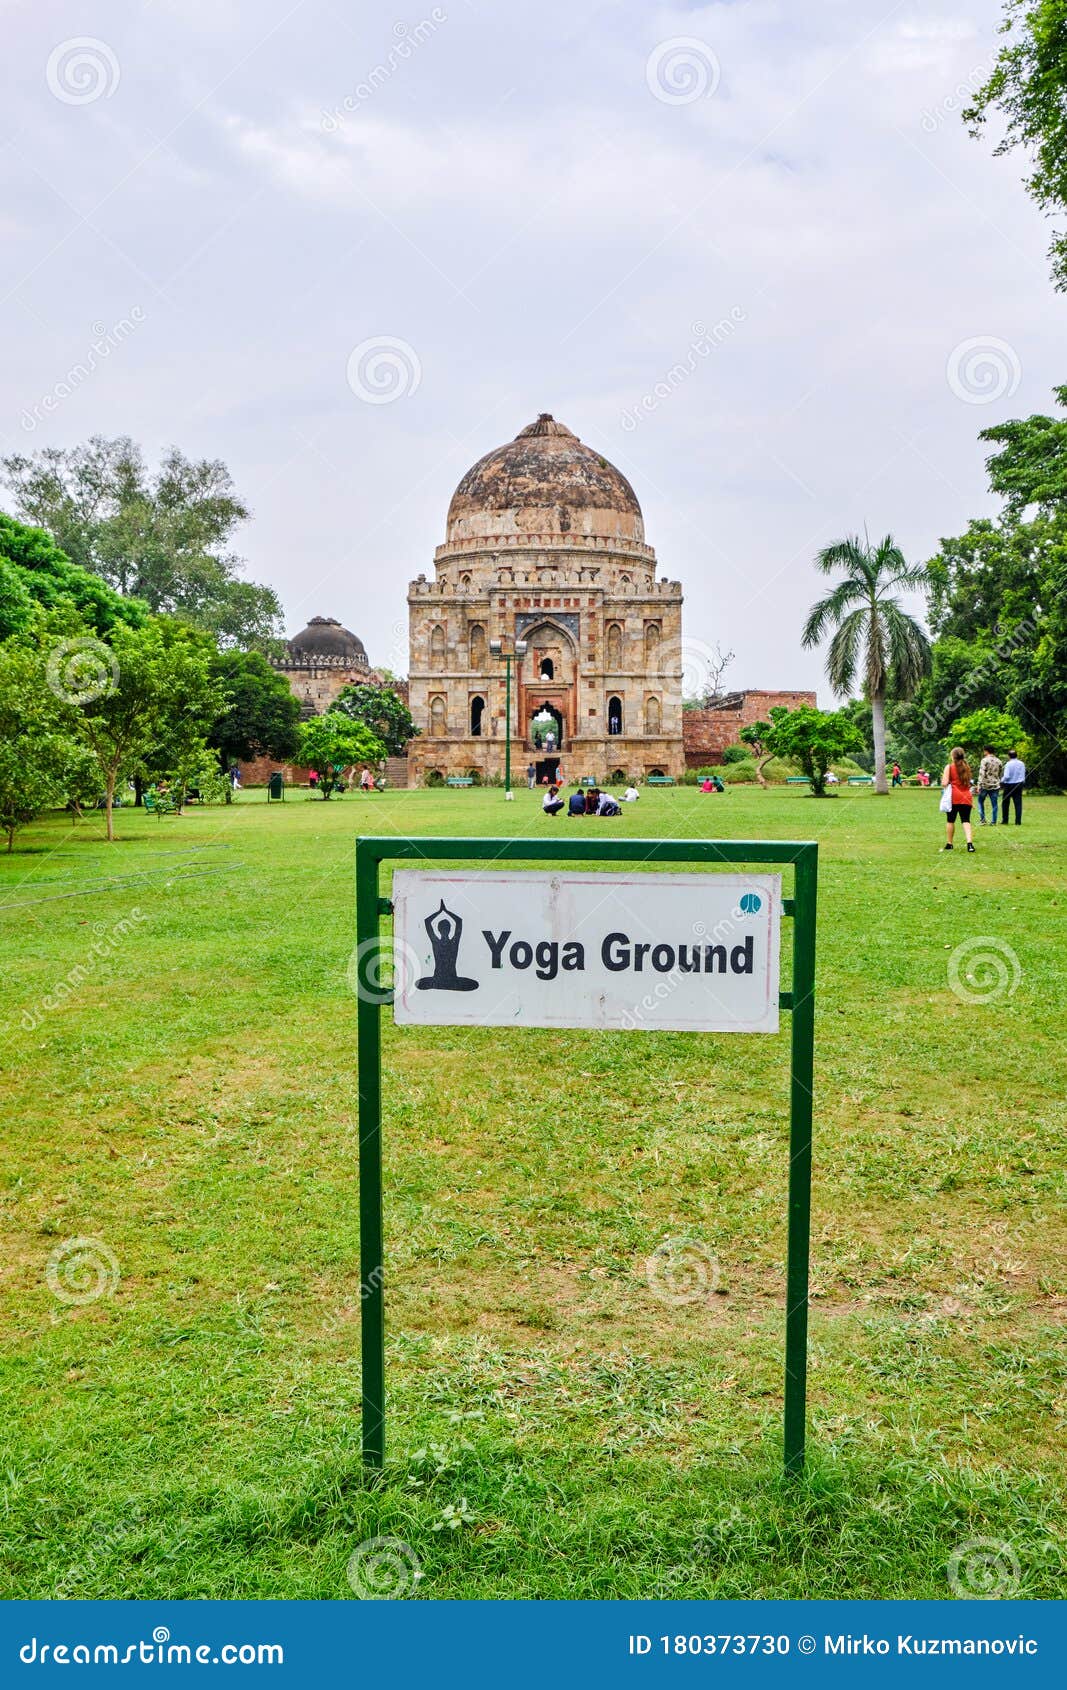 Yoga Ground Field in Lodi Gardens in New Delhi Editorial Image - Image ...